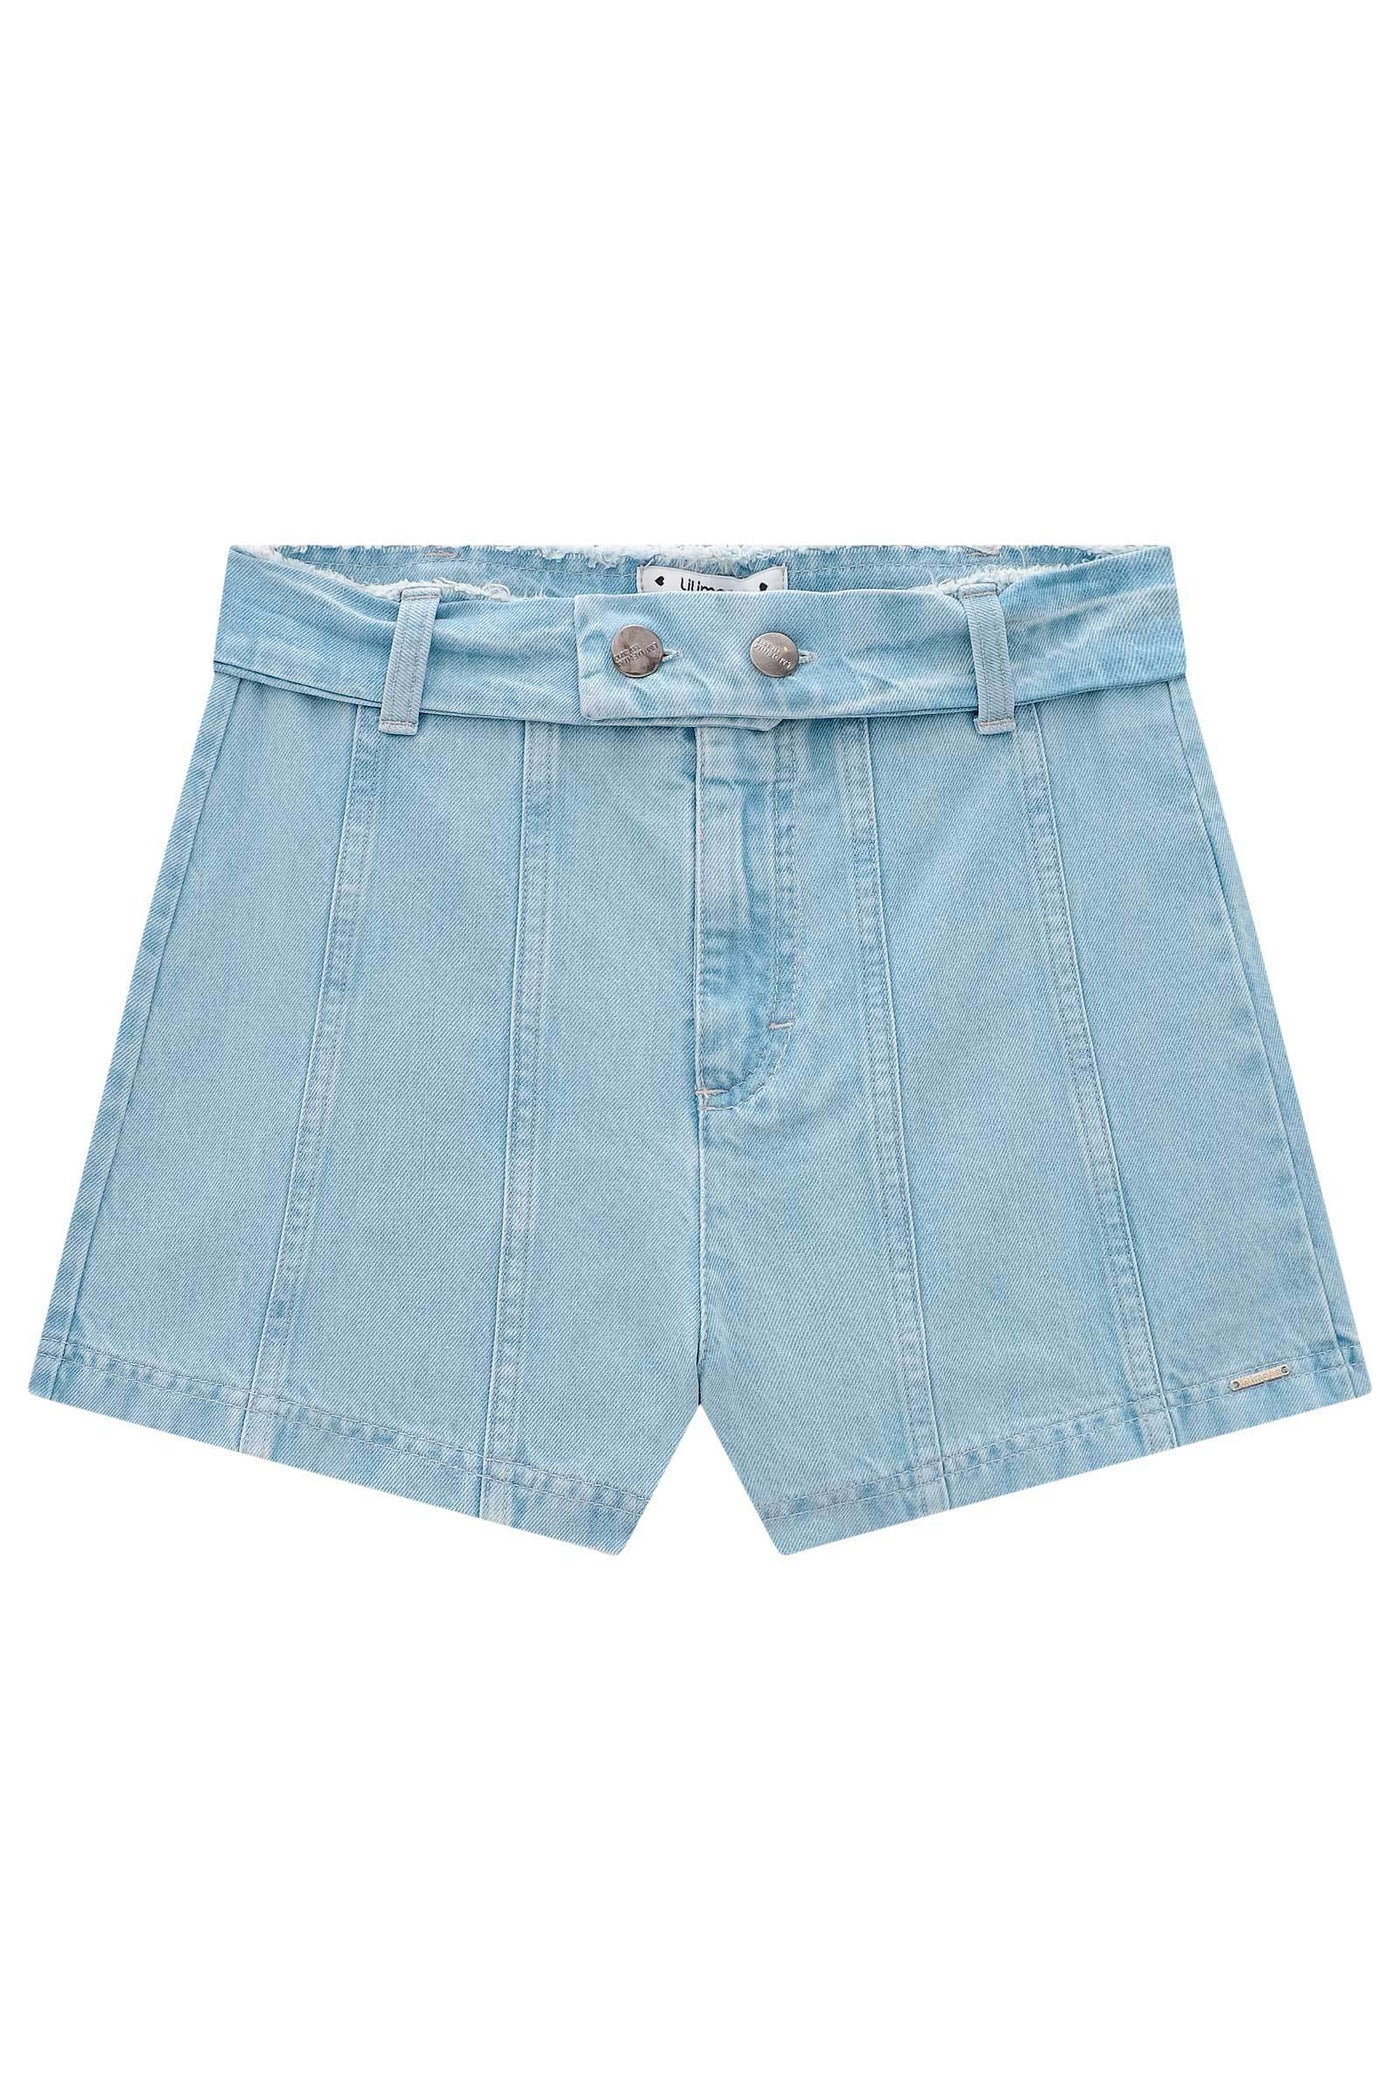 Shorts em Jeans Arkansas 73855 Lilimoon